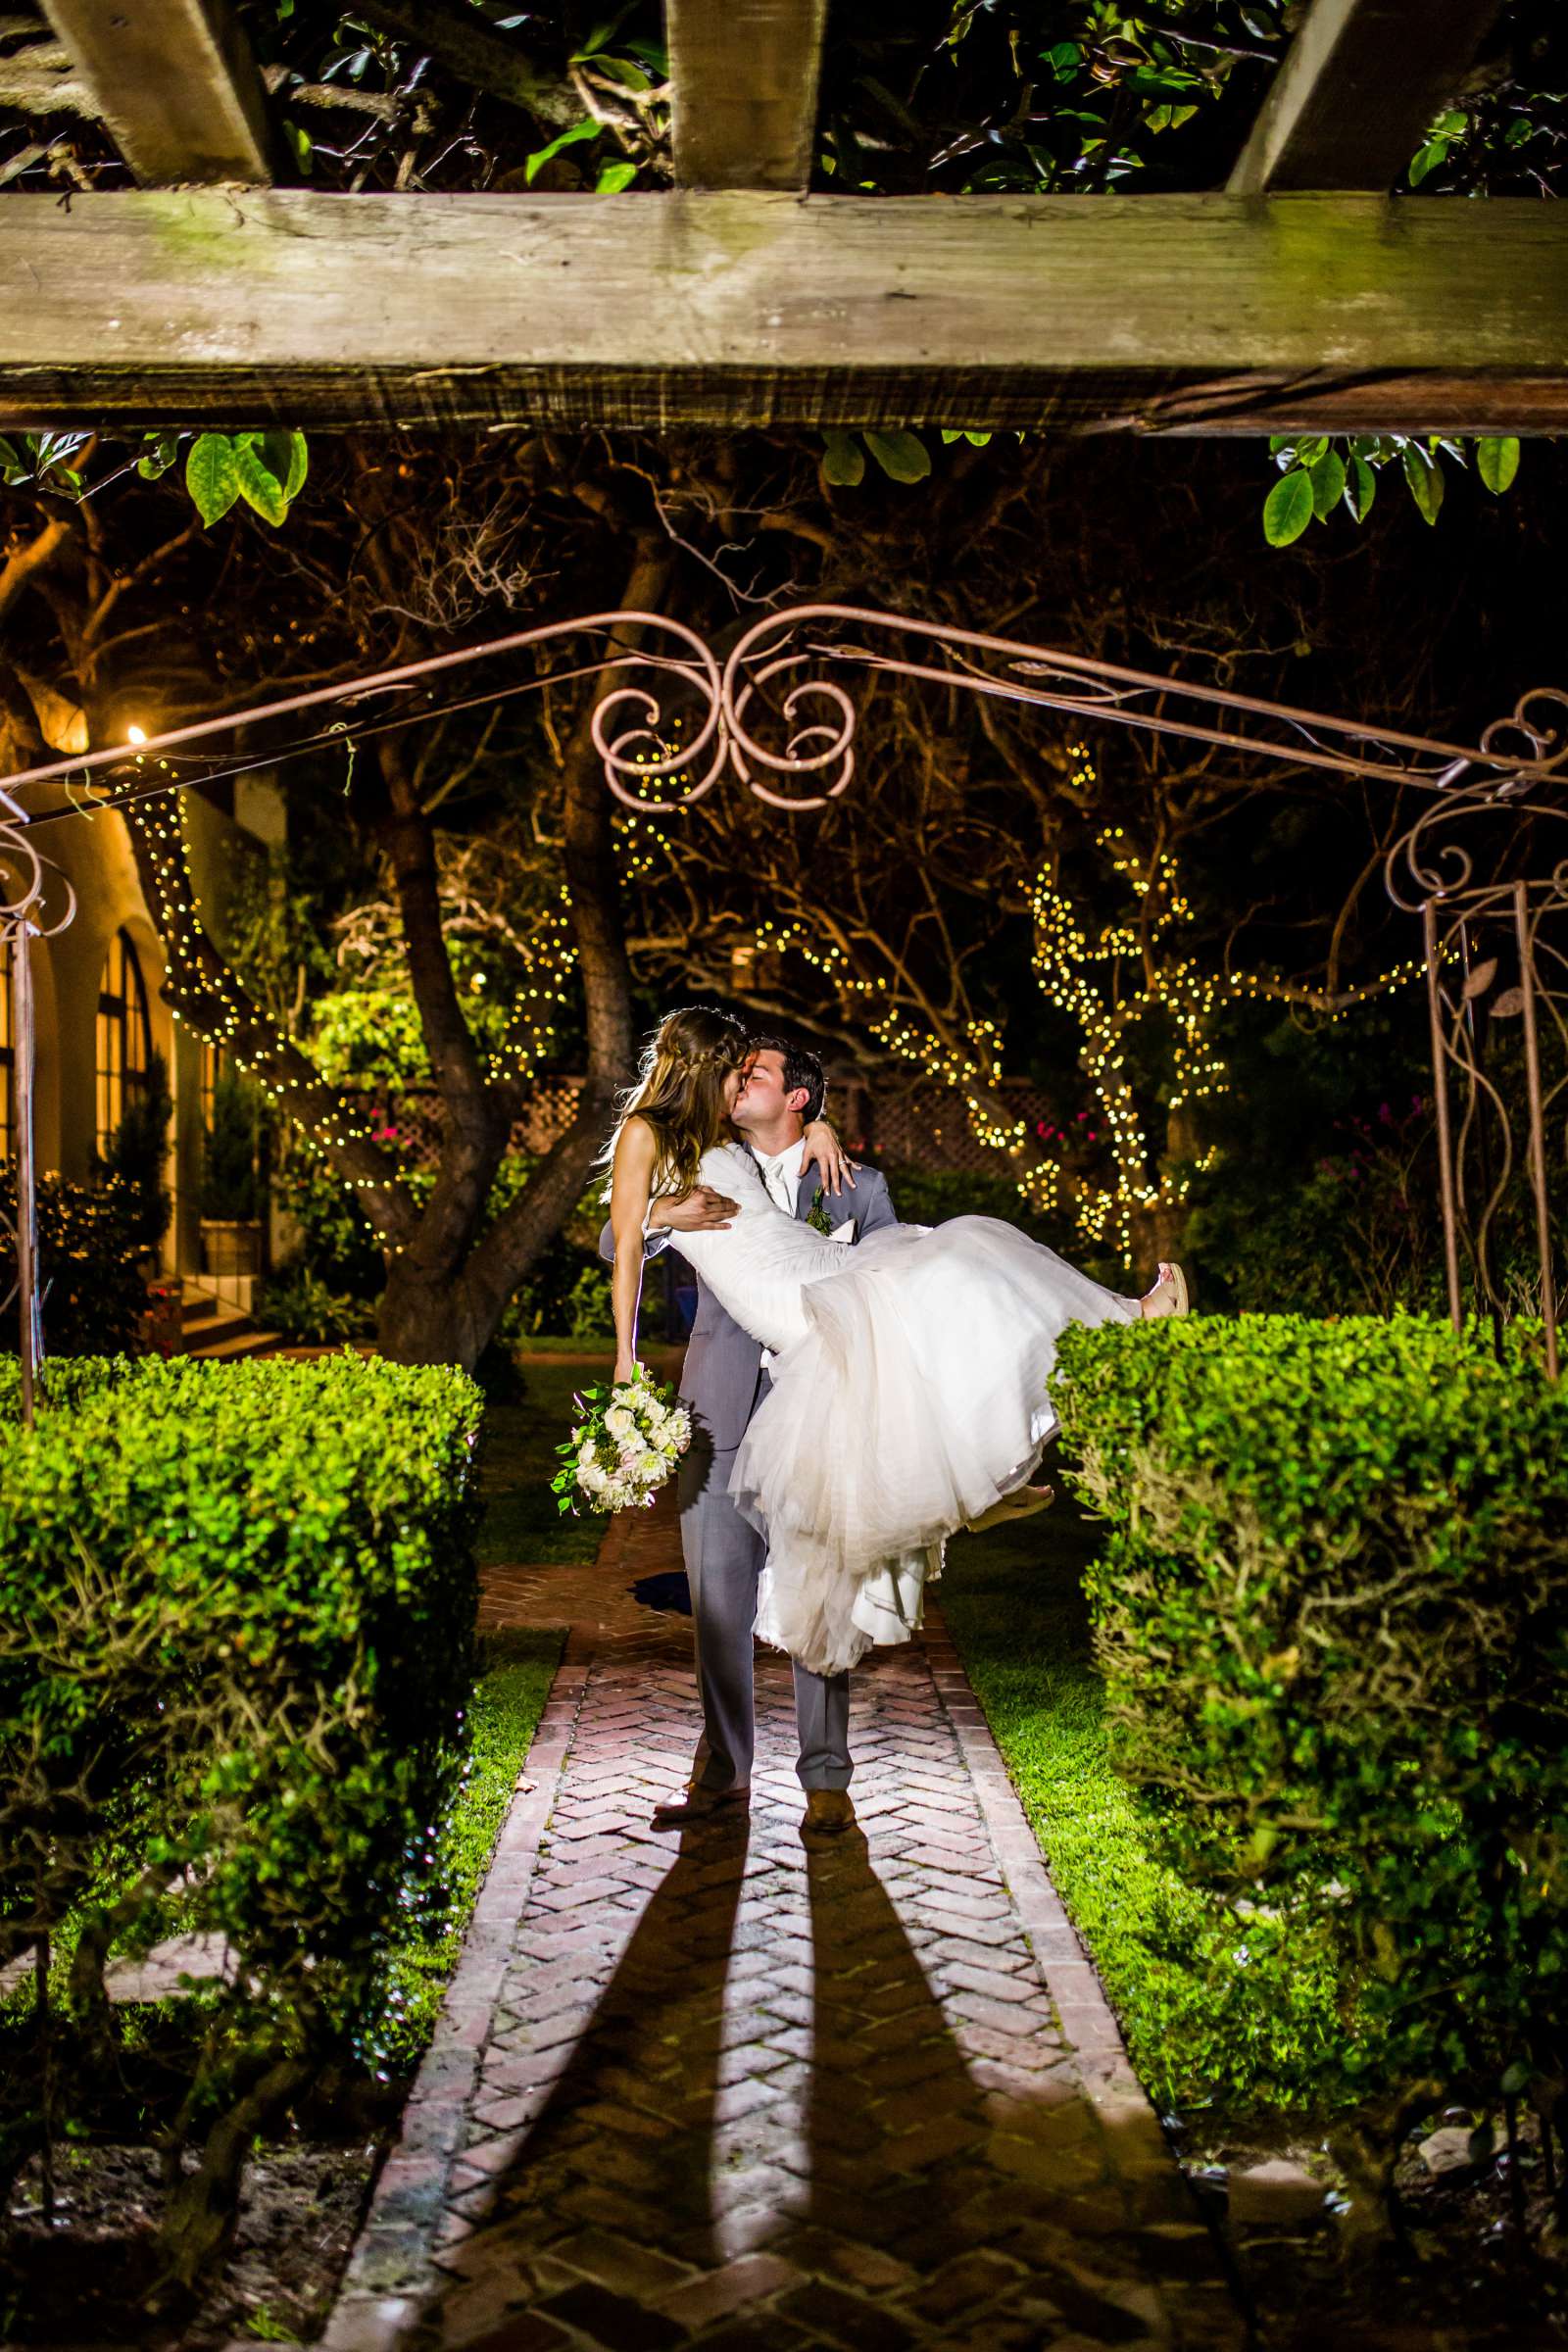 La Jolla Woman's Club Wedding, Colette and Joseph Wedding Photo #5 by True Photography